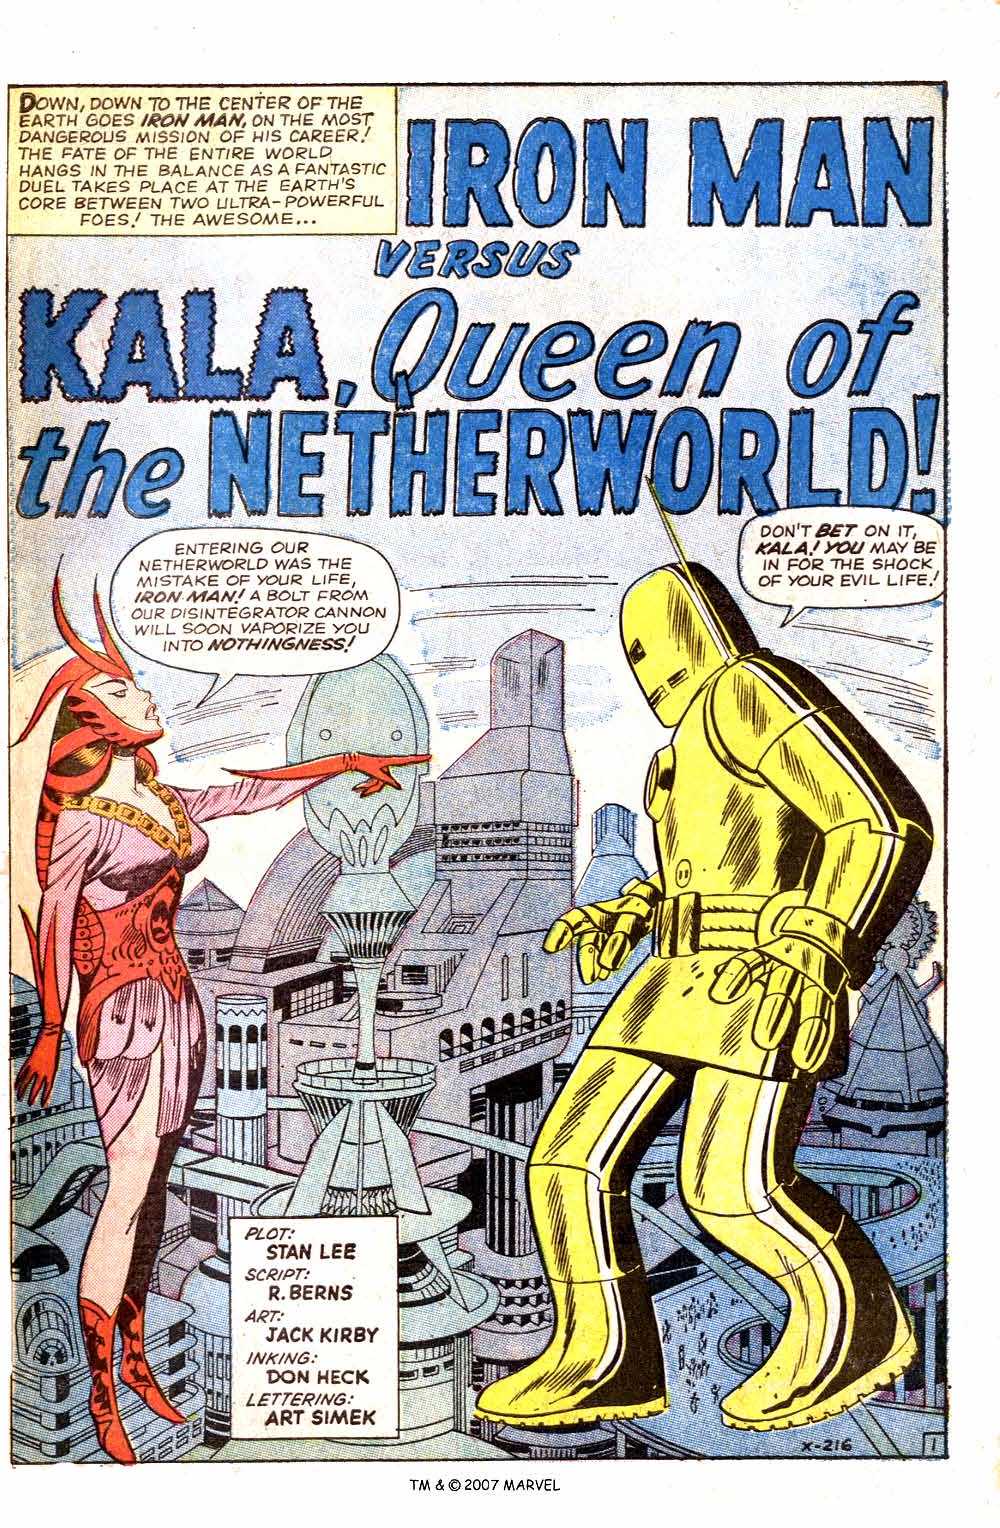 Tales of Suspense #43 Cover: Iron Man VS Kala, Queen of the Underworld!